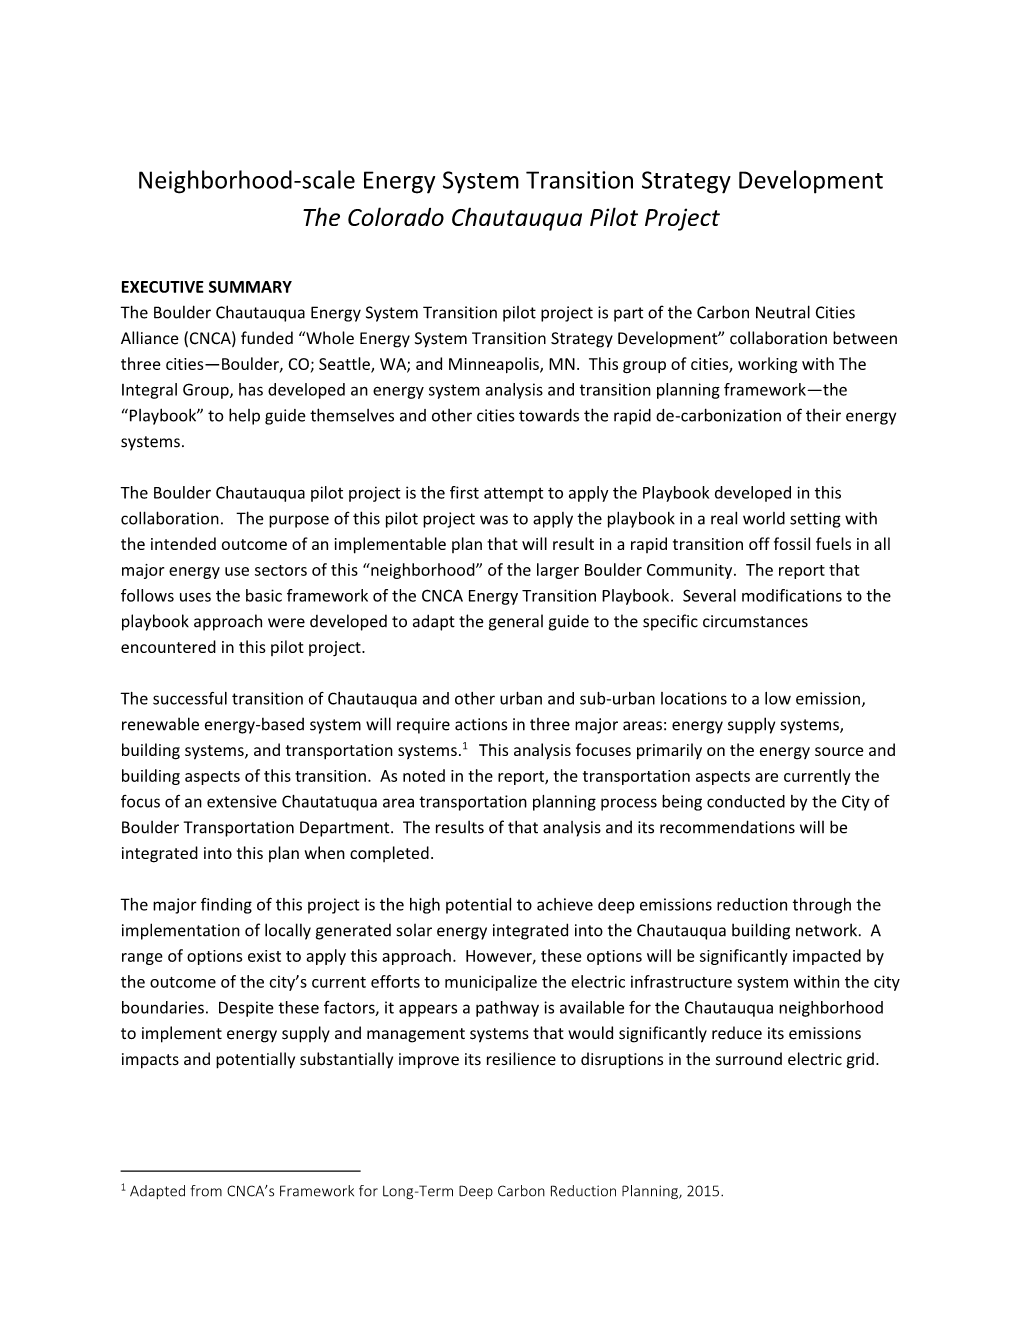 Neighborhood-Scale Energy System Transition Strategy Development the Colorado Chautauqua Pilot Project